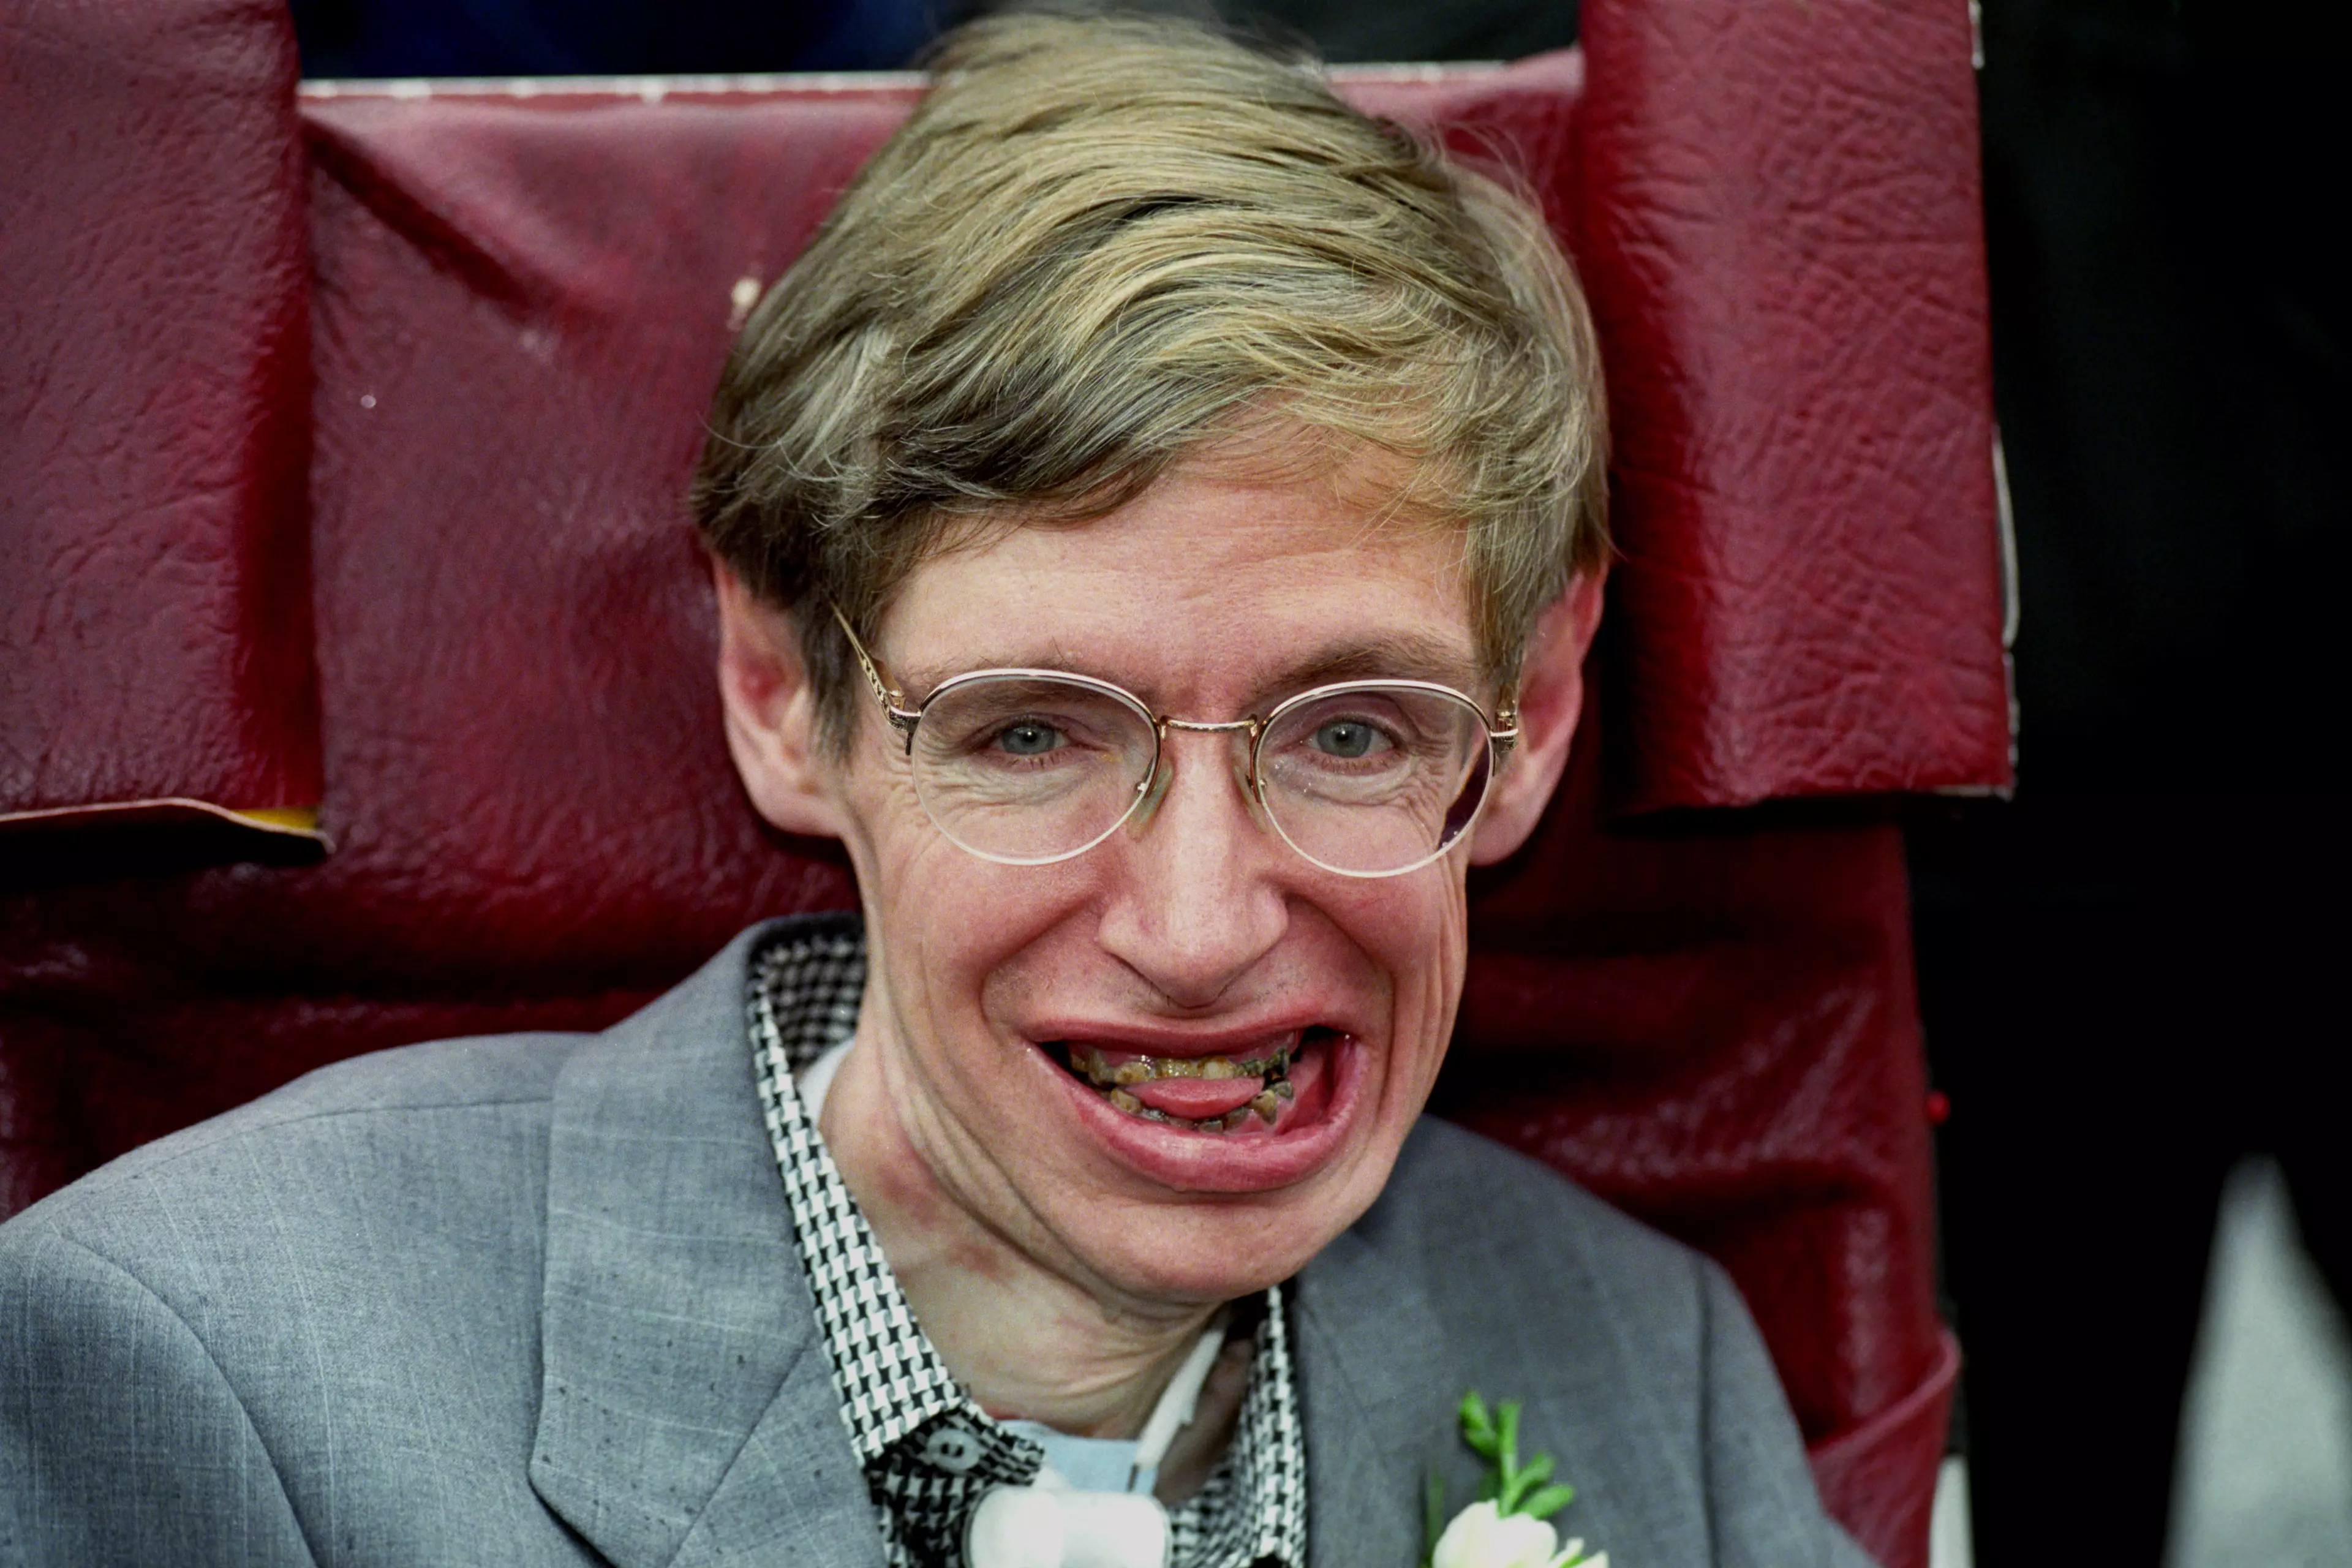 Stephen Hawking in 1995.